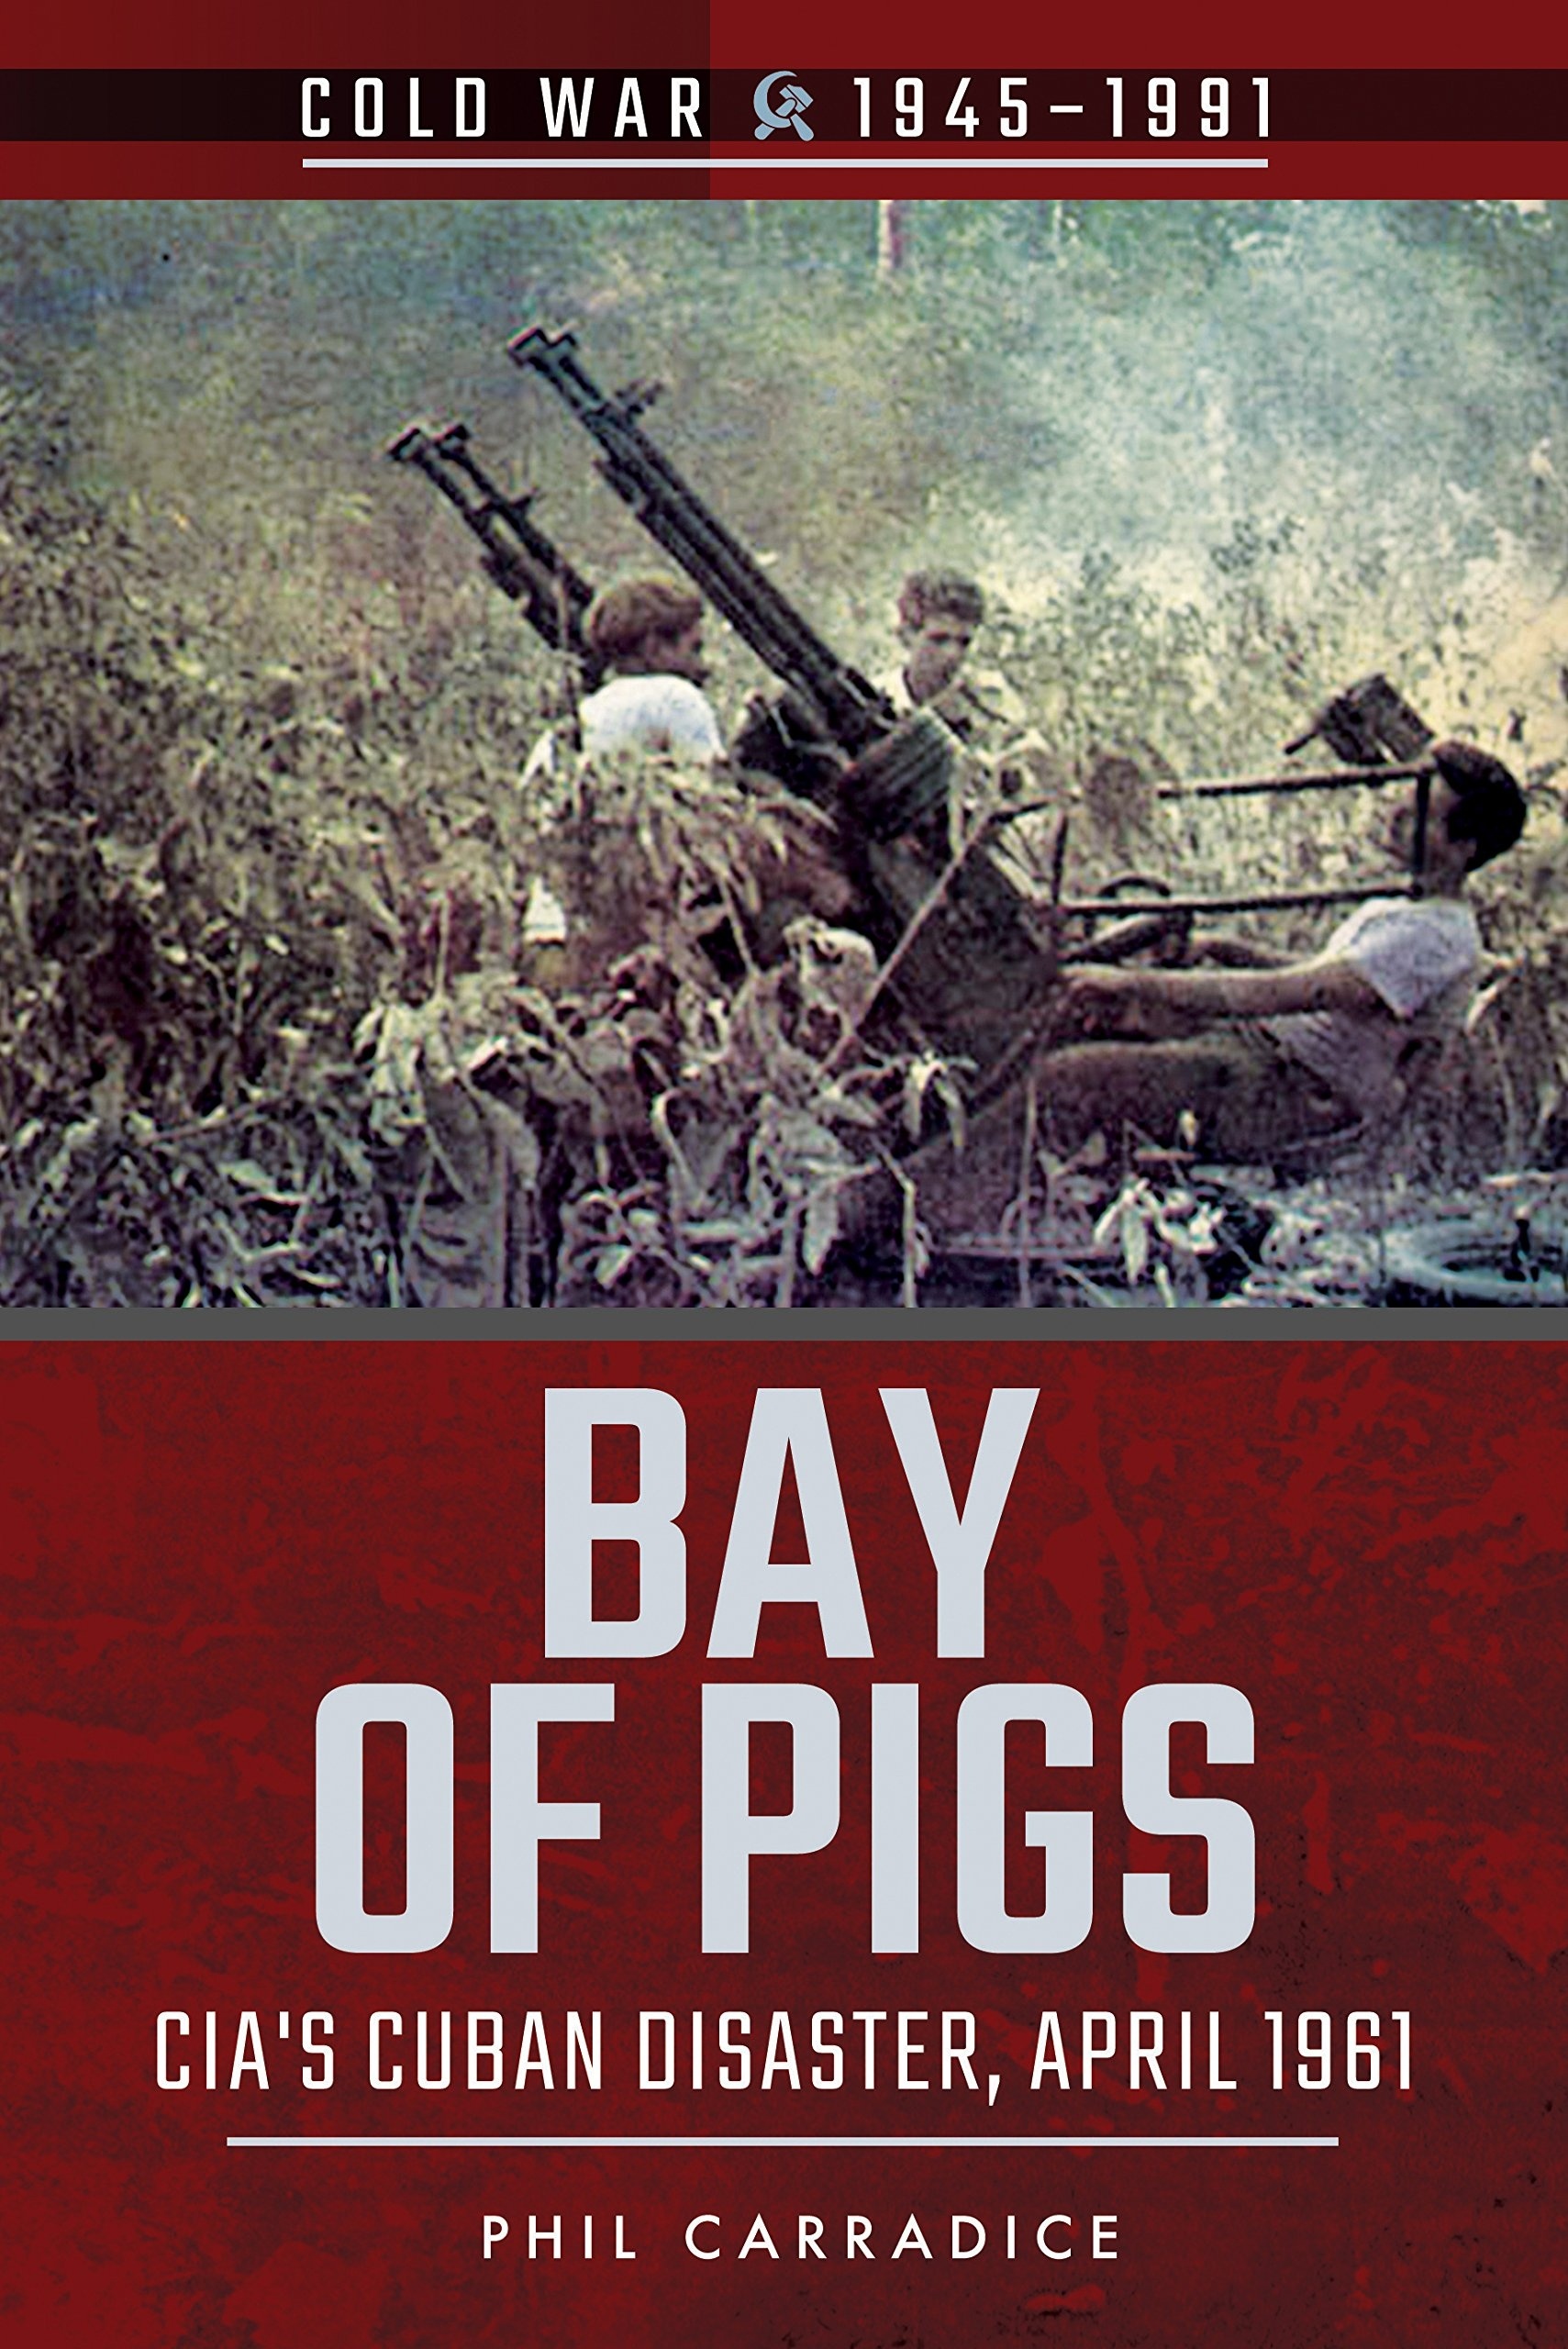 Bay of Pigs "CIA's Cuban Disaster, April 1961 (Cold War 1945 1991)"